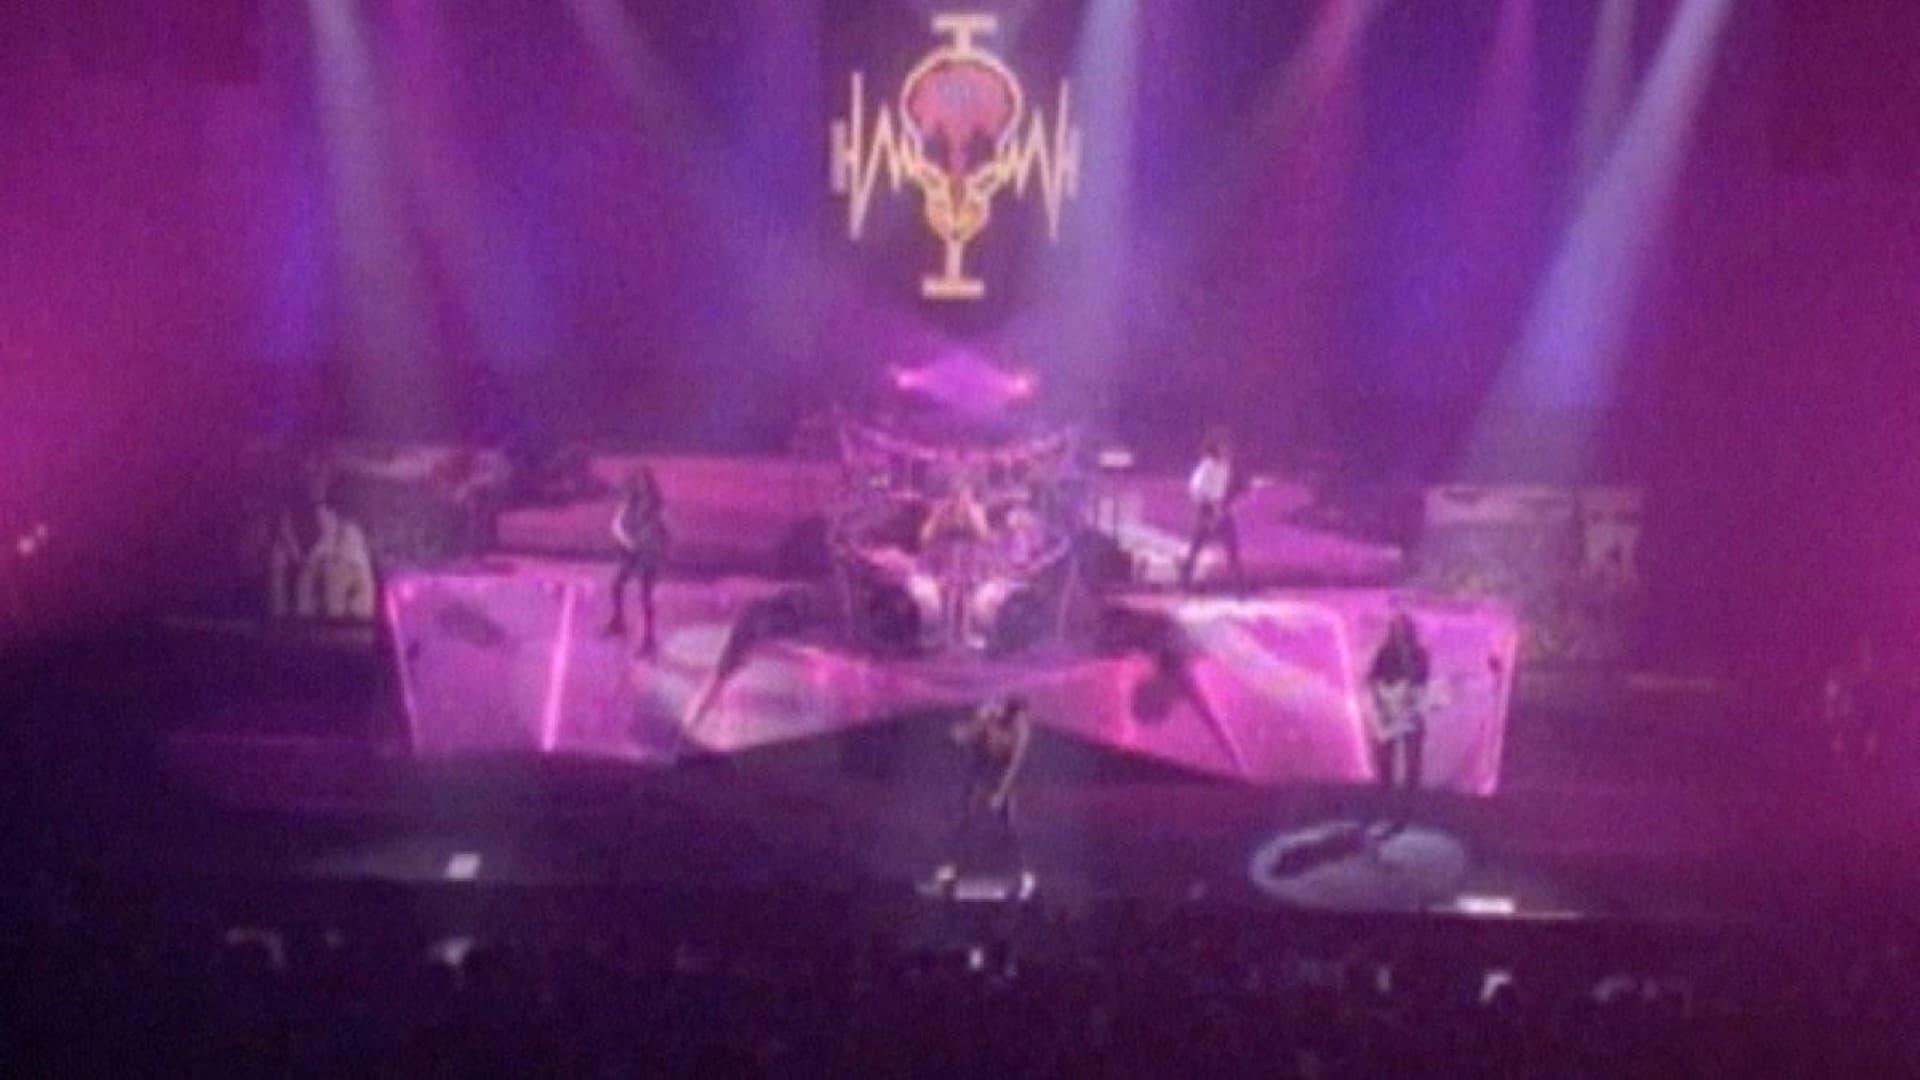 Queensrÿche: Operation Livecrime backdrop